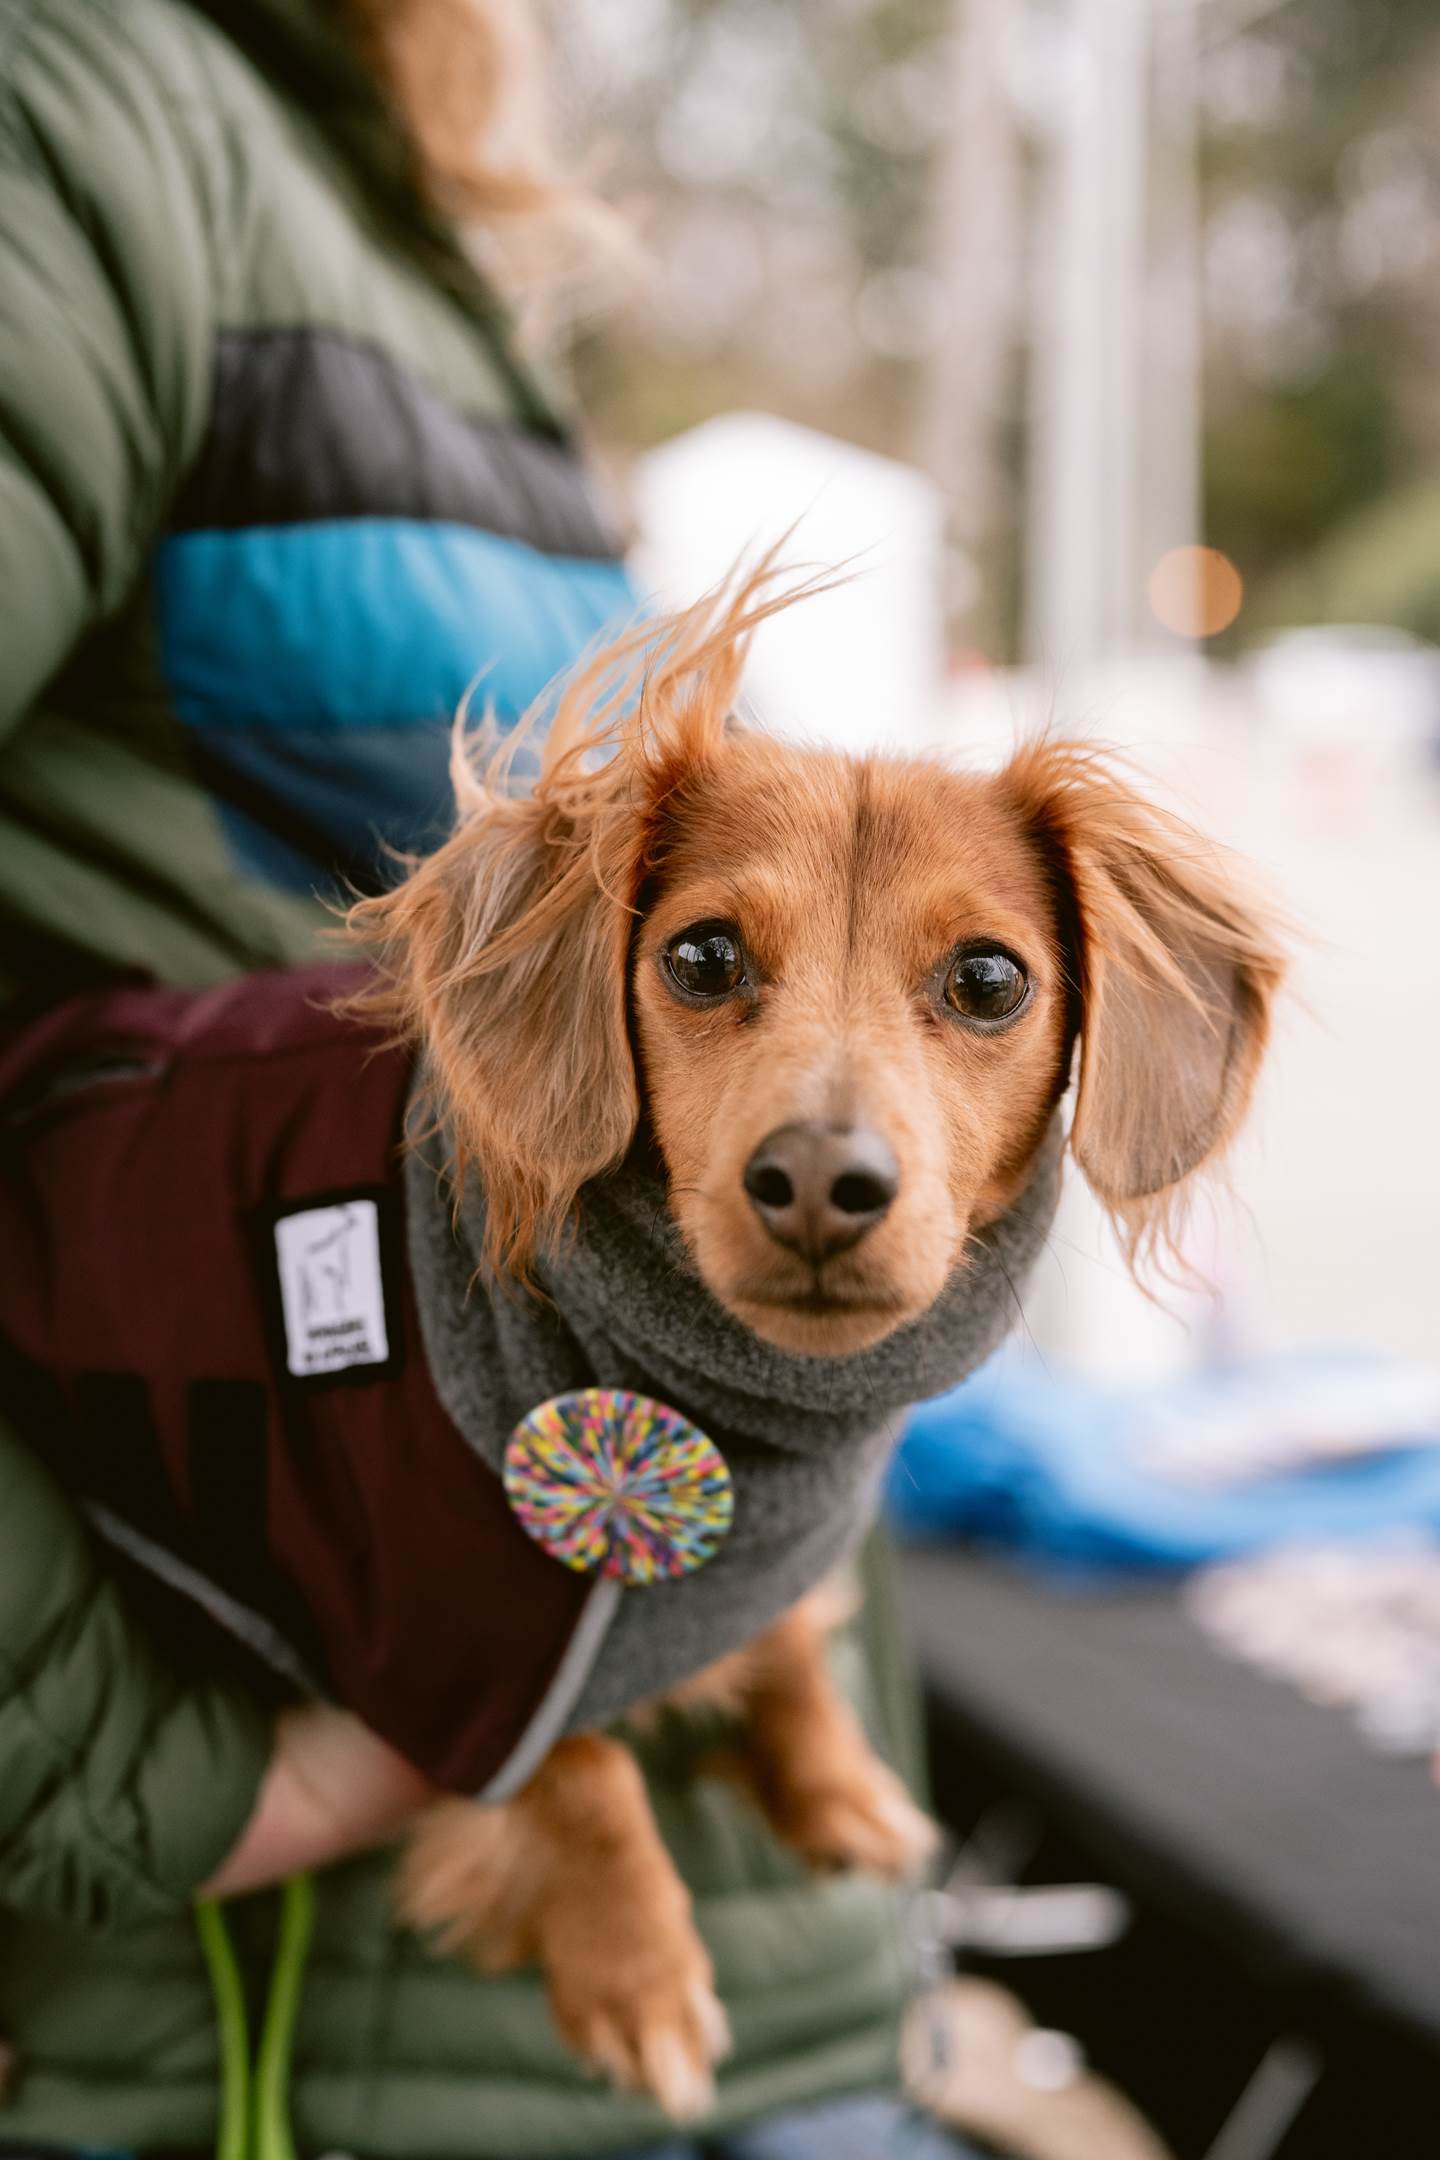 Dog wearing a sweater and a SFO pin